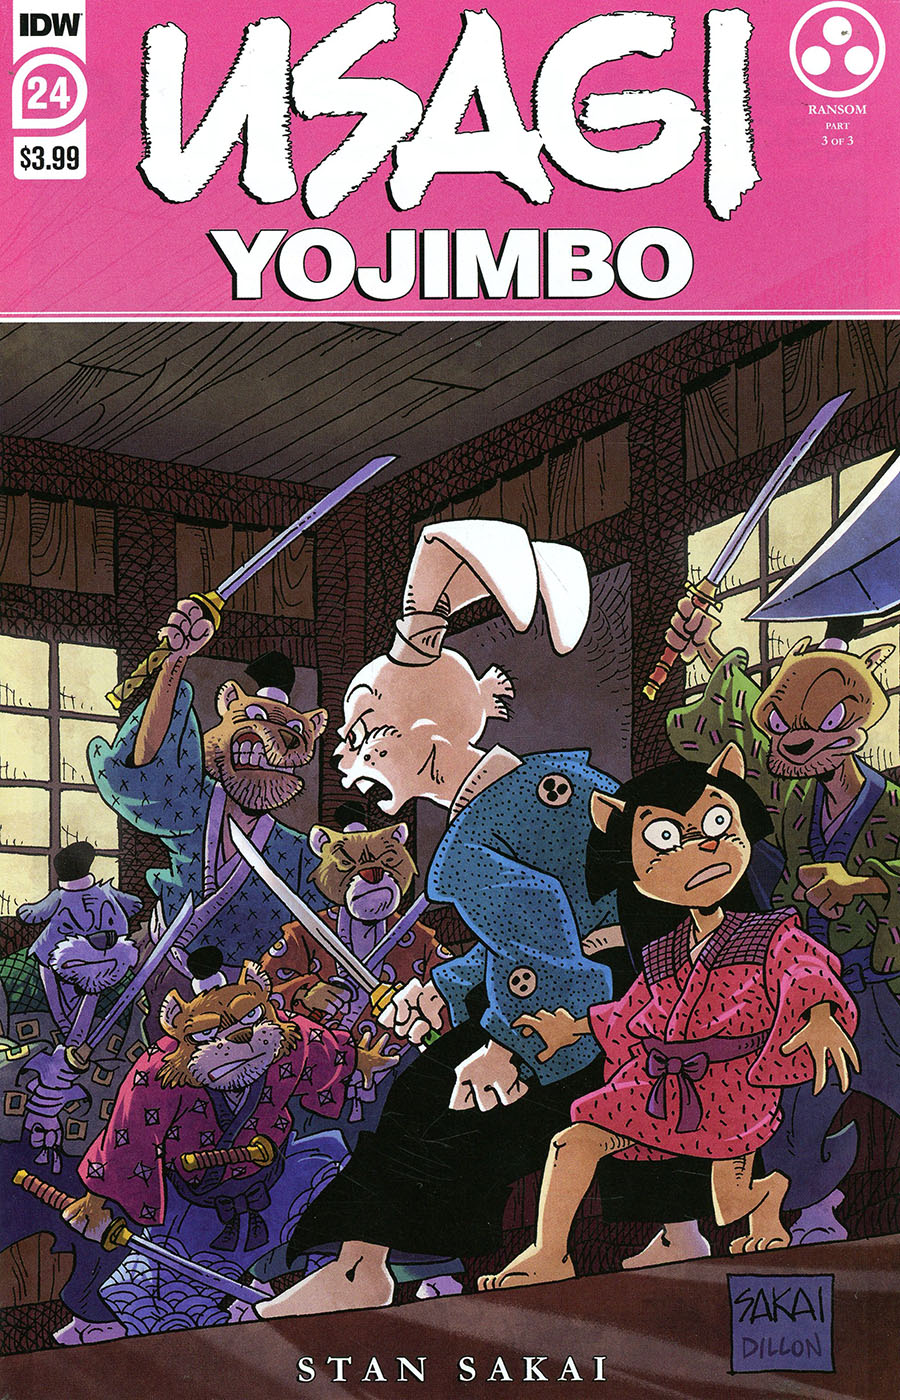 Usagi Yojimbo Vol 4 #24 Cover A Regular Stan Sakai Cover